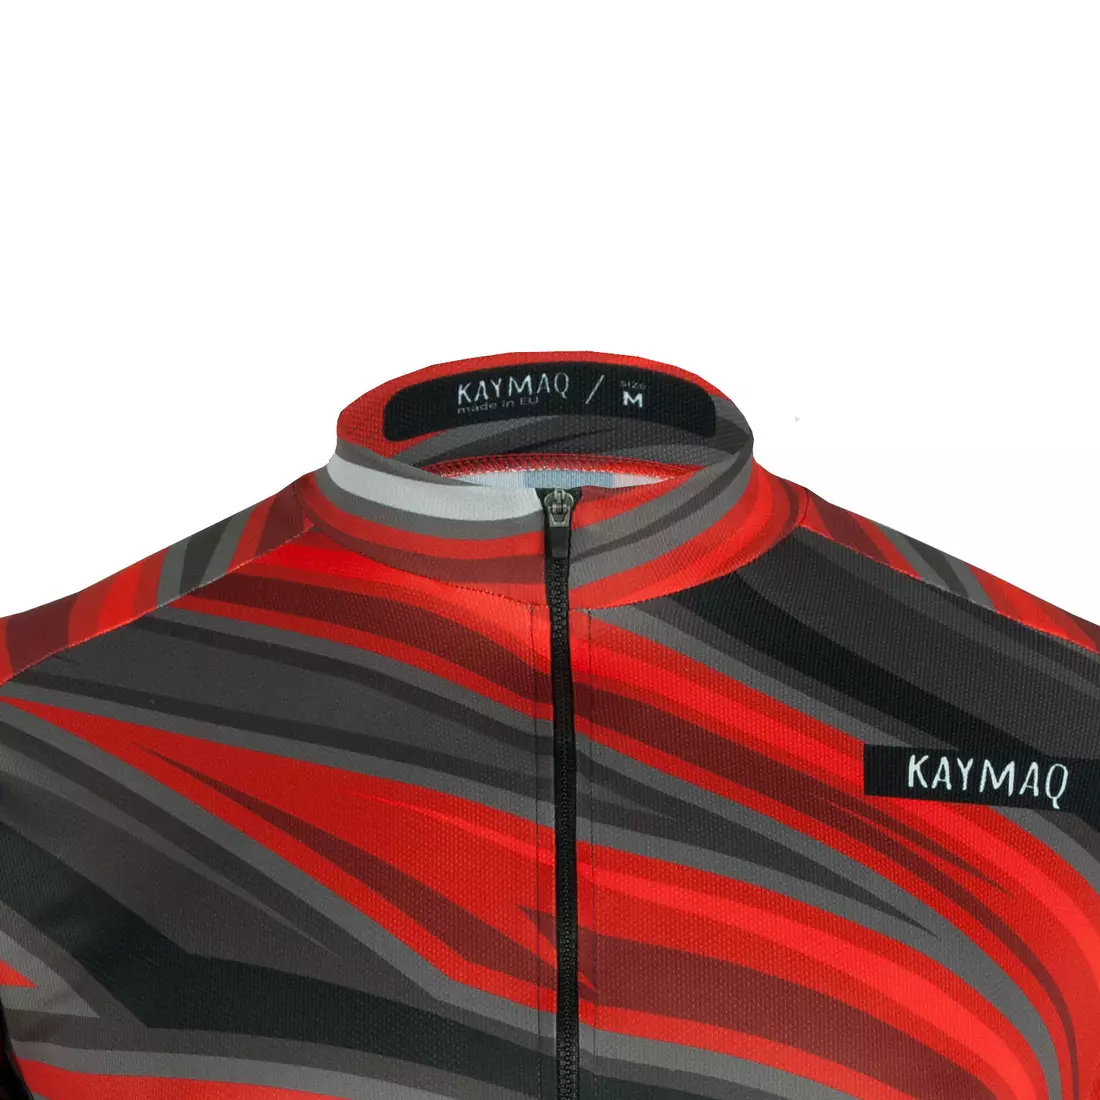 KAYMAQ DESIGN M48 men's cycling jersey, red